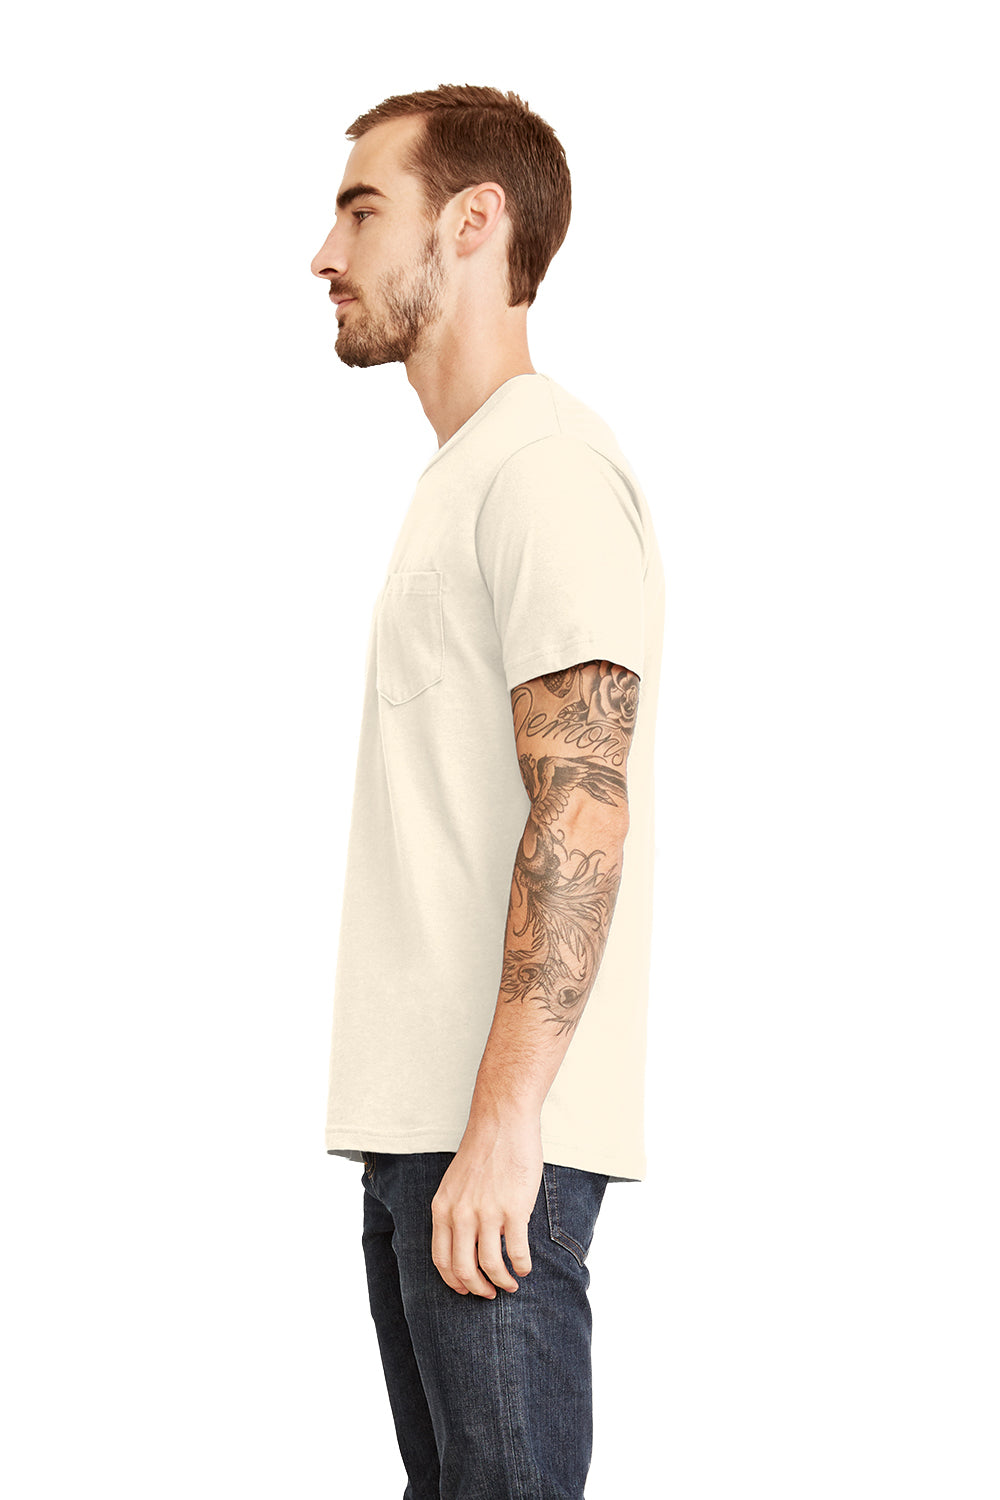 Next Level 3605 Mens Fine Jersey Short Sleeve Crewneck T-Shirt w/ Pocket Natural Side